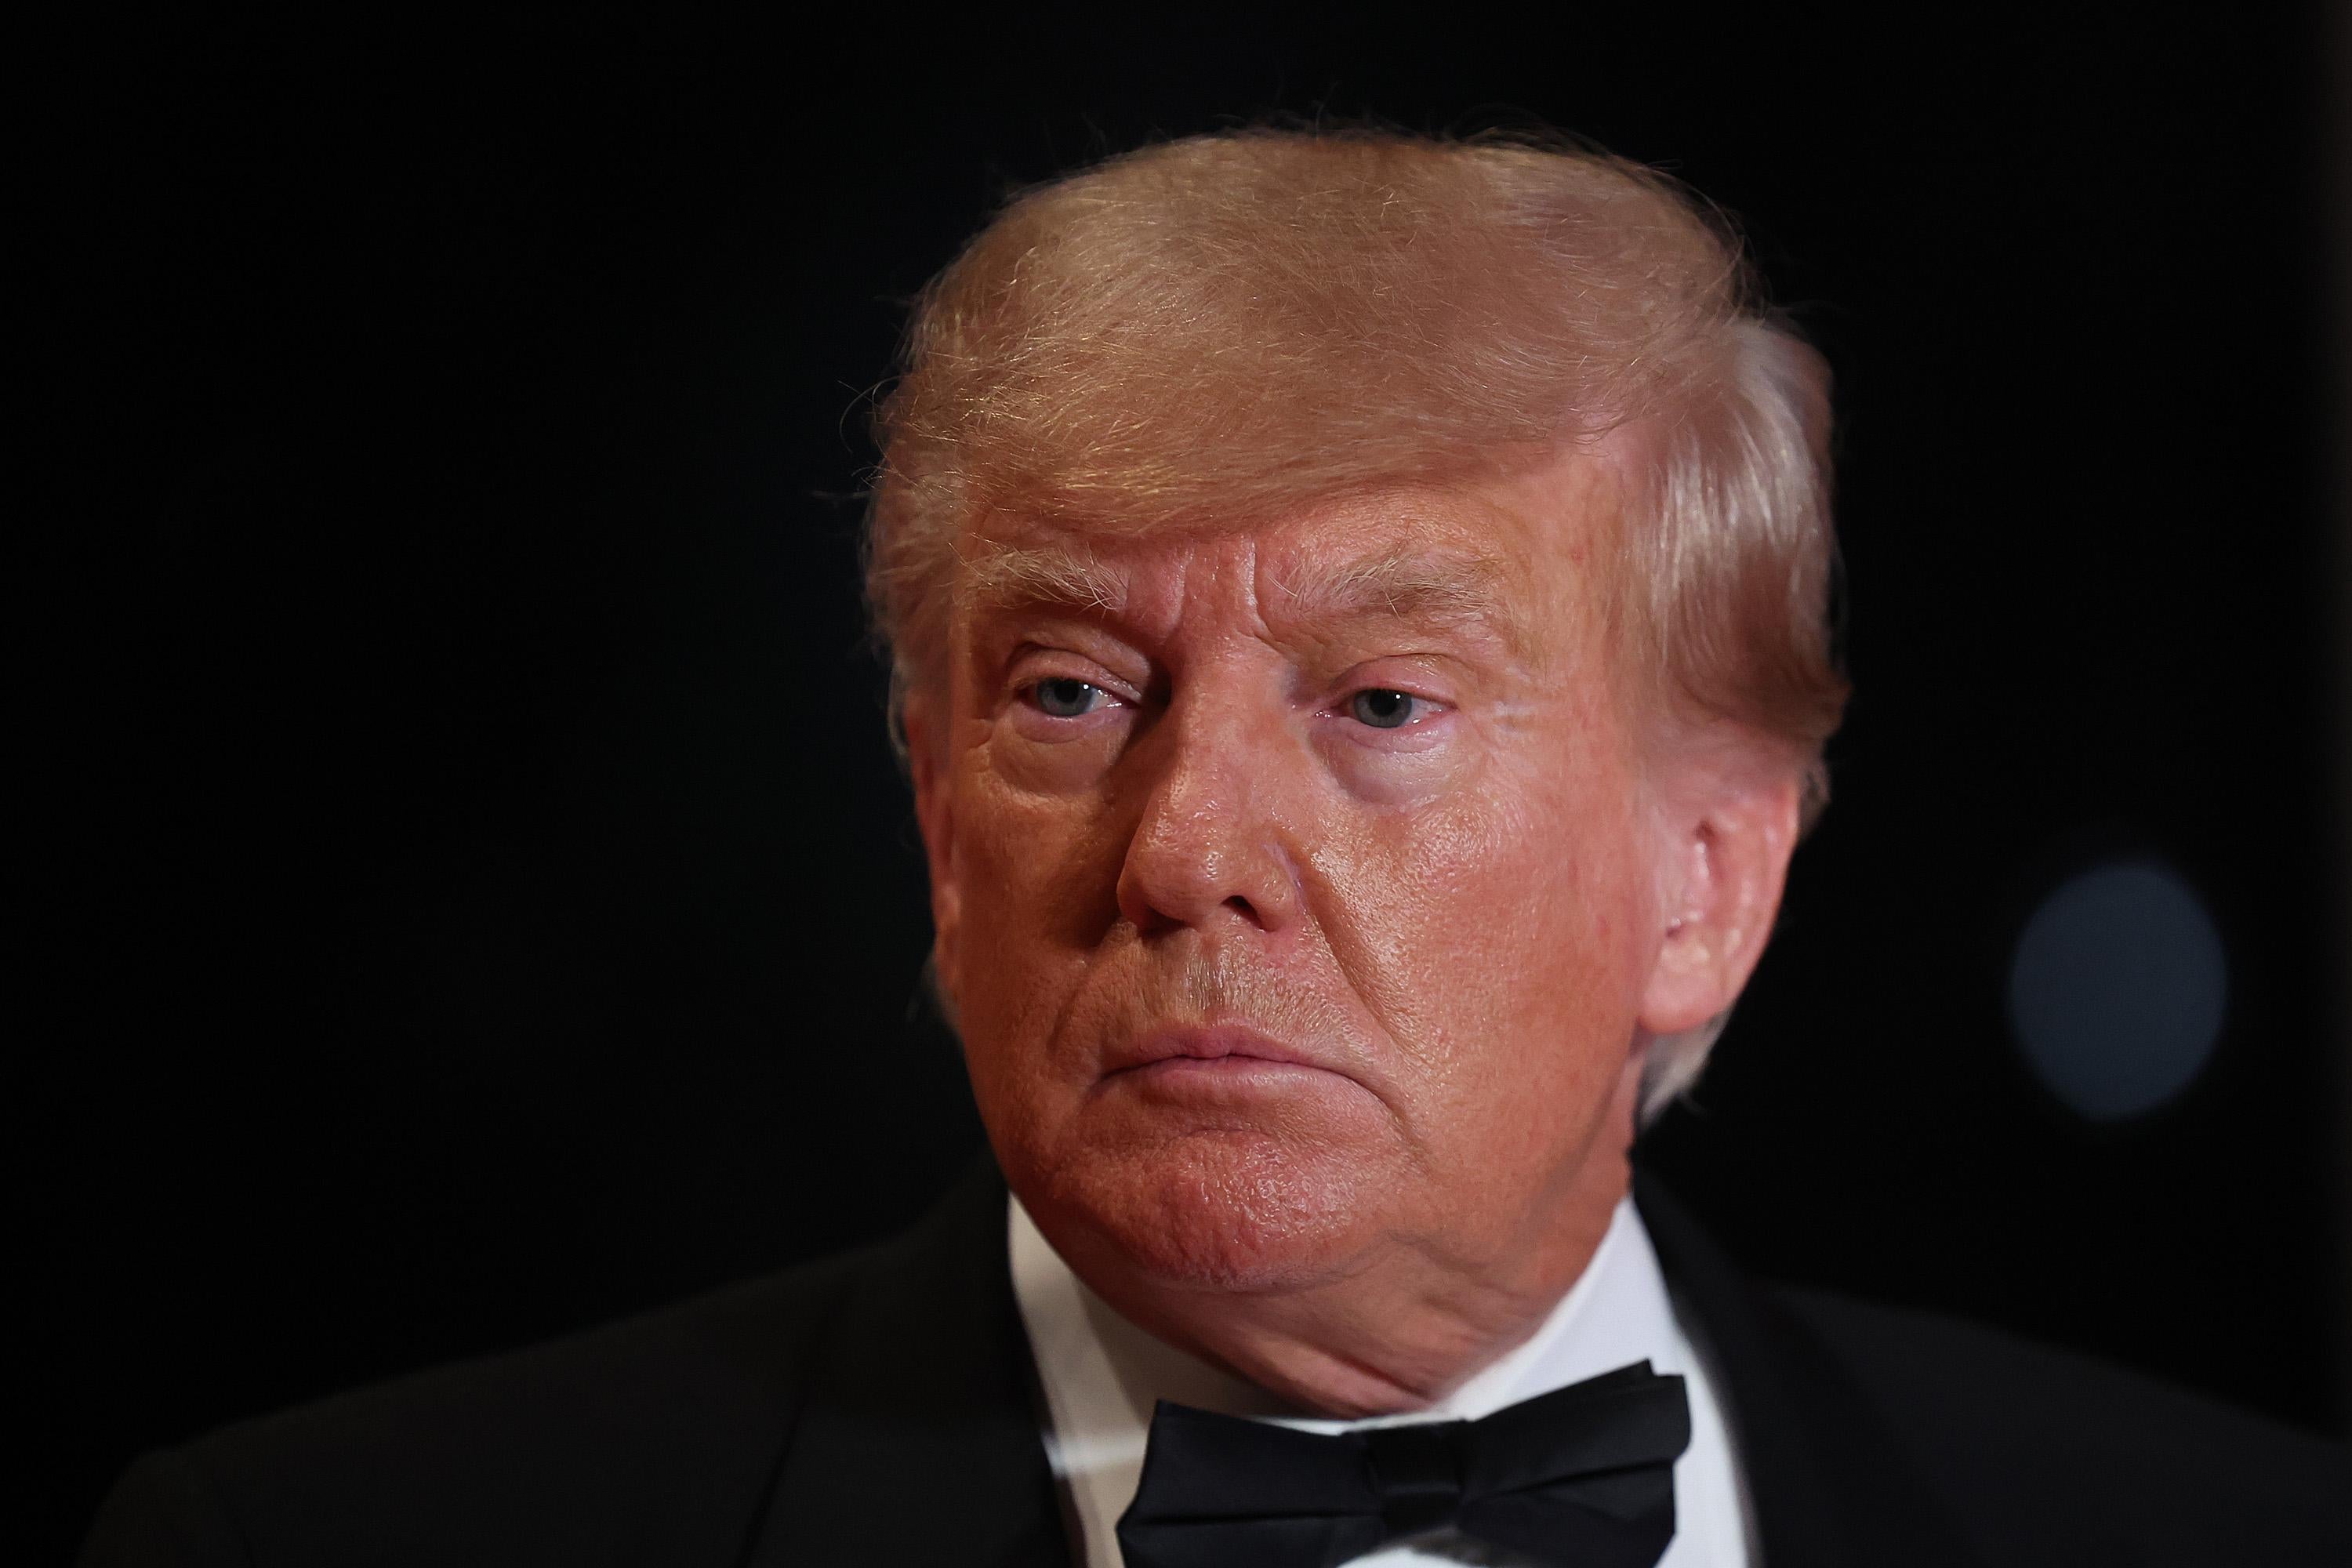 Donald Trump in a tuxedo